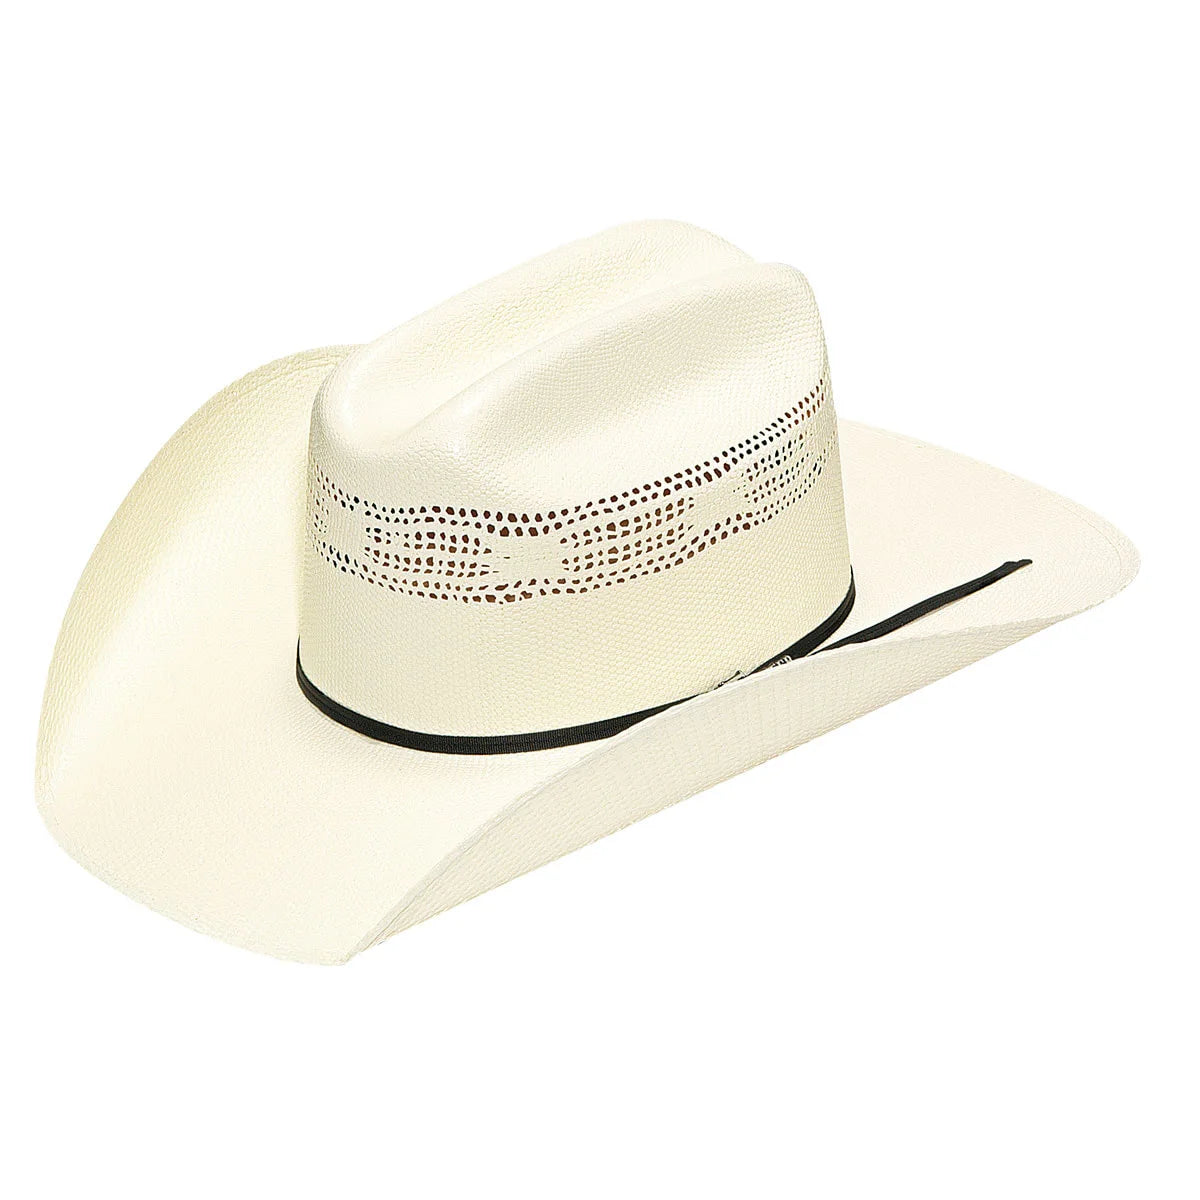 Twister Bangora Straw Cowboy Hat - Natural